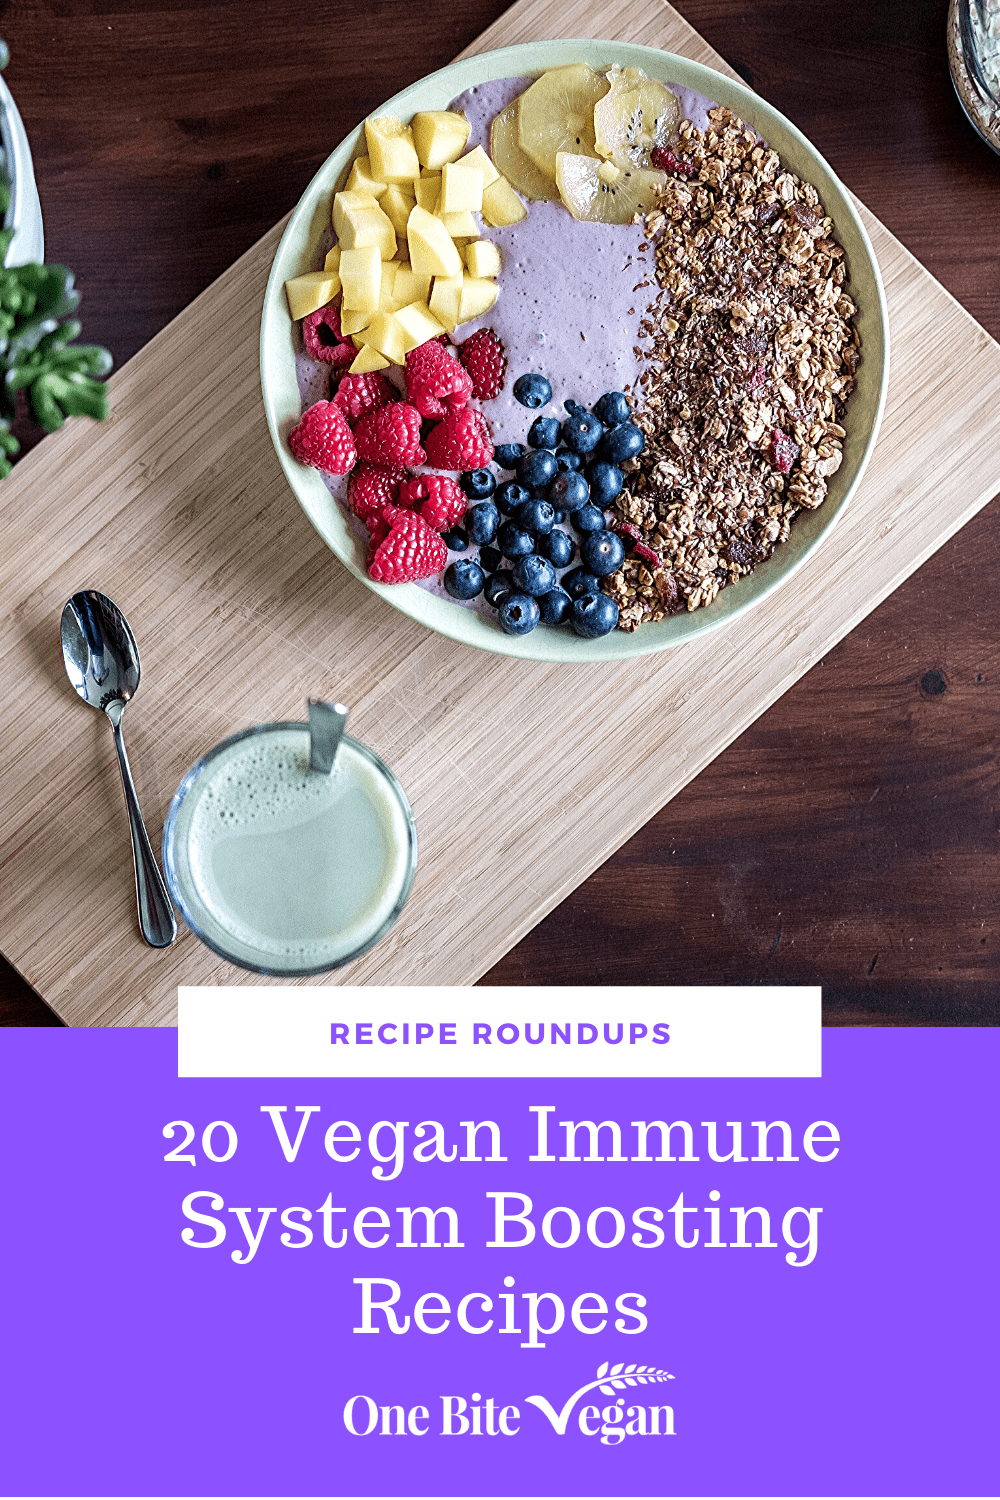 20 Vegan Immune System Boosting Recipes